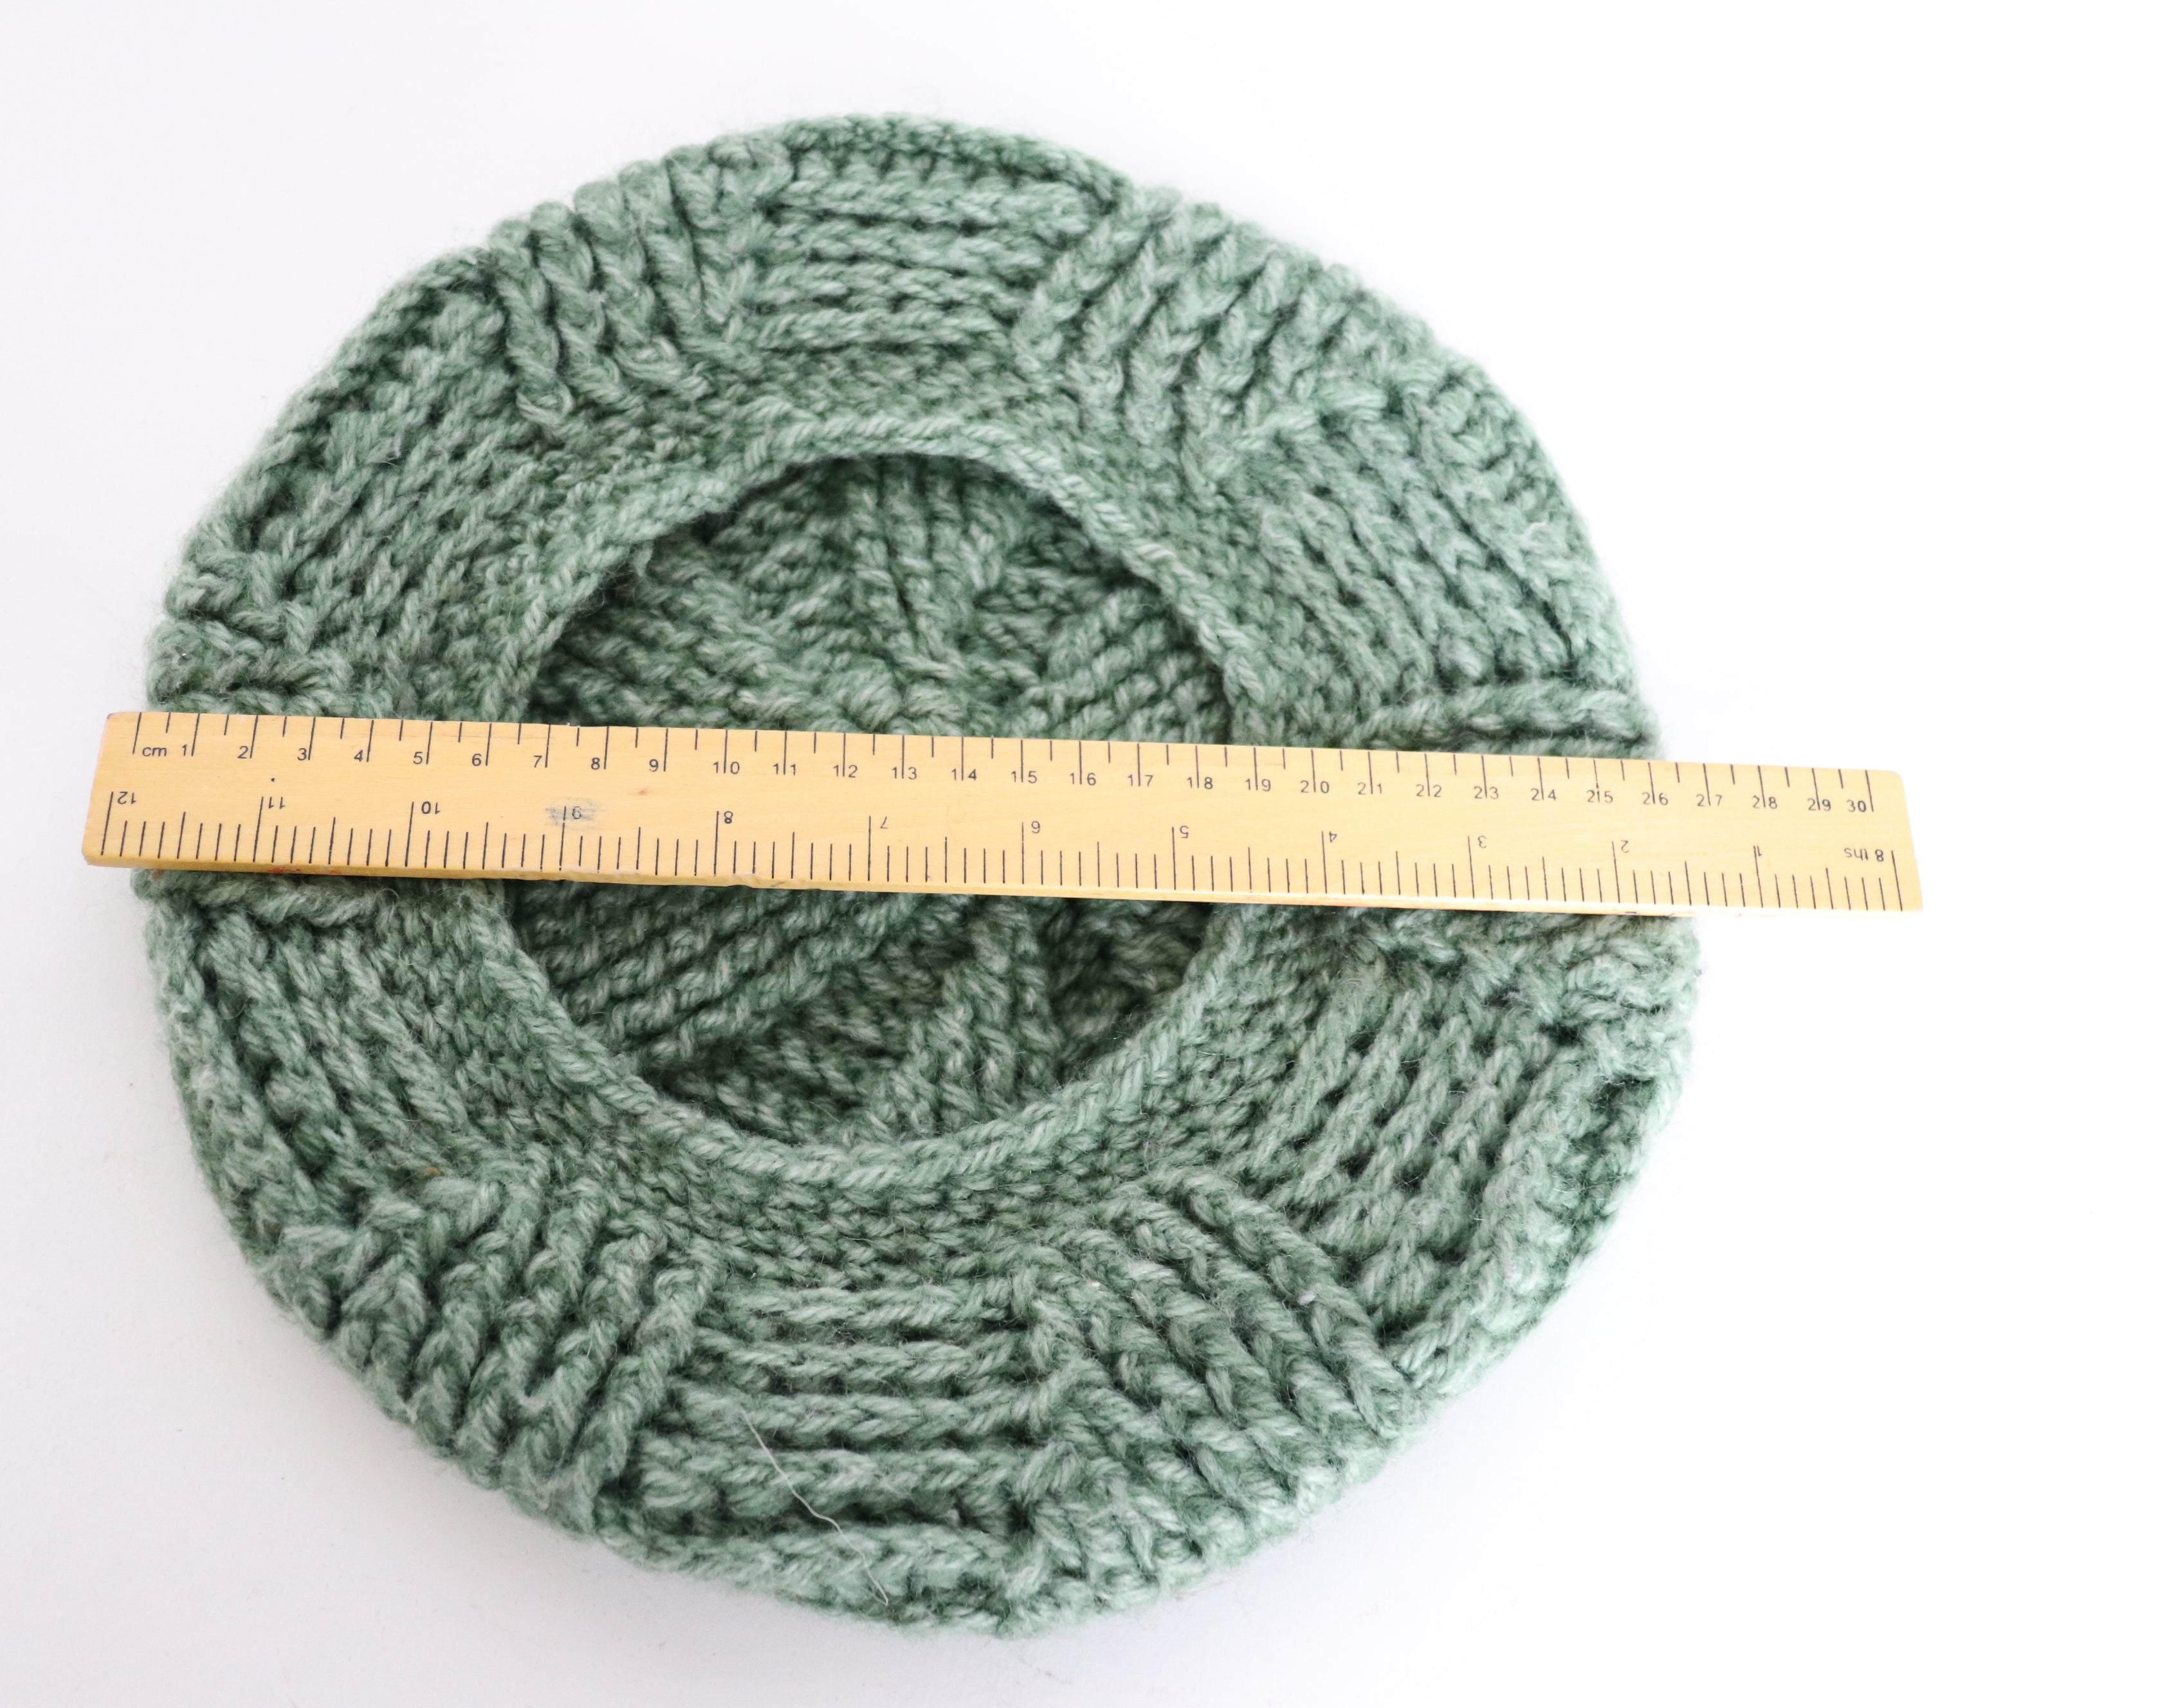 Vintage Wool Hand Knit Beret - Green - Medium